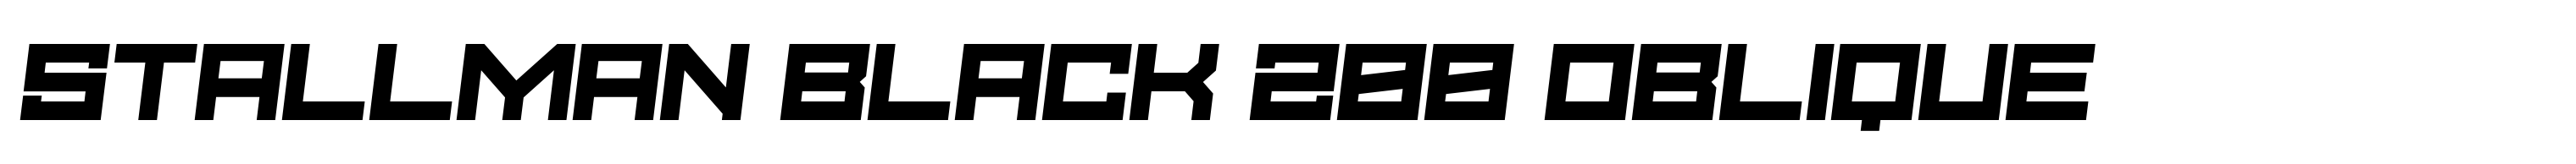 Stallman Black 200 Oblique